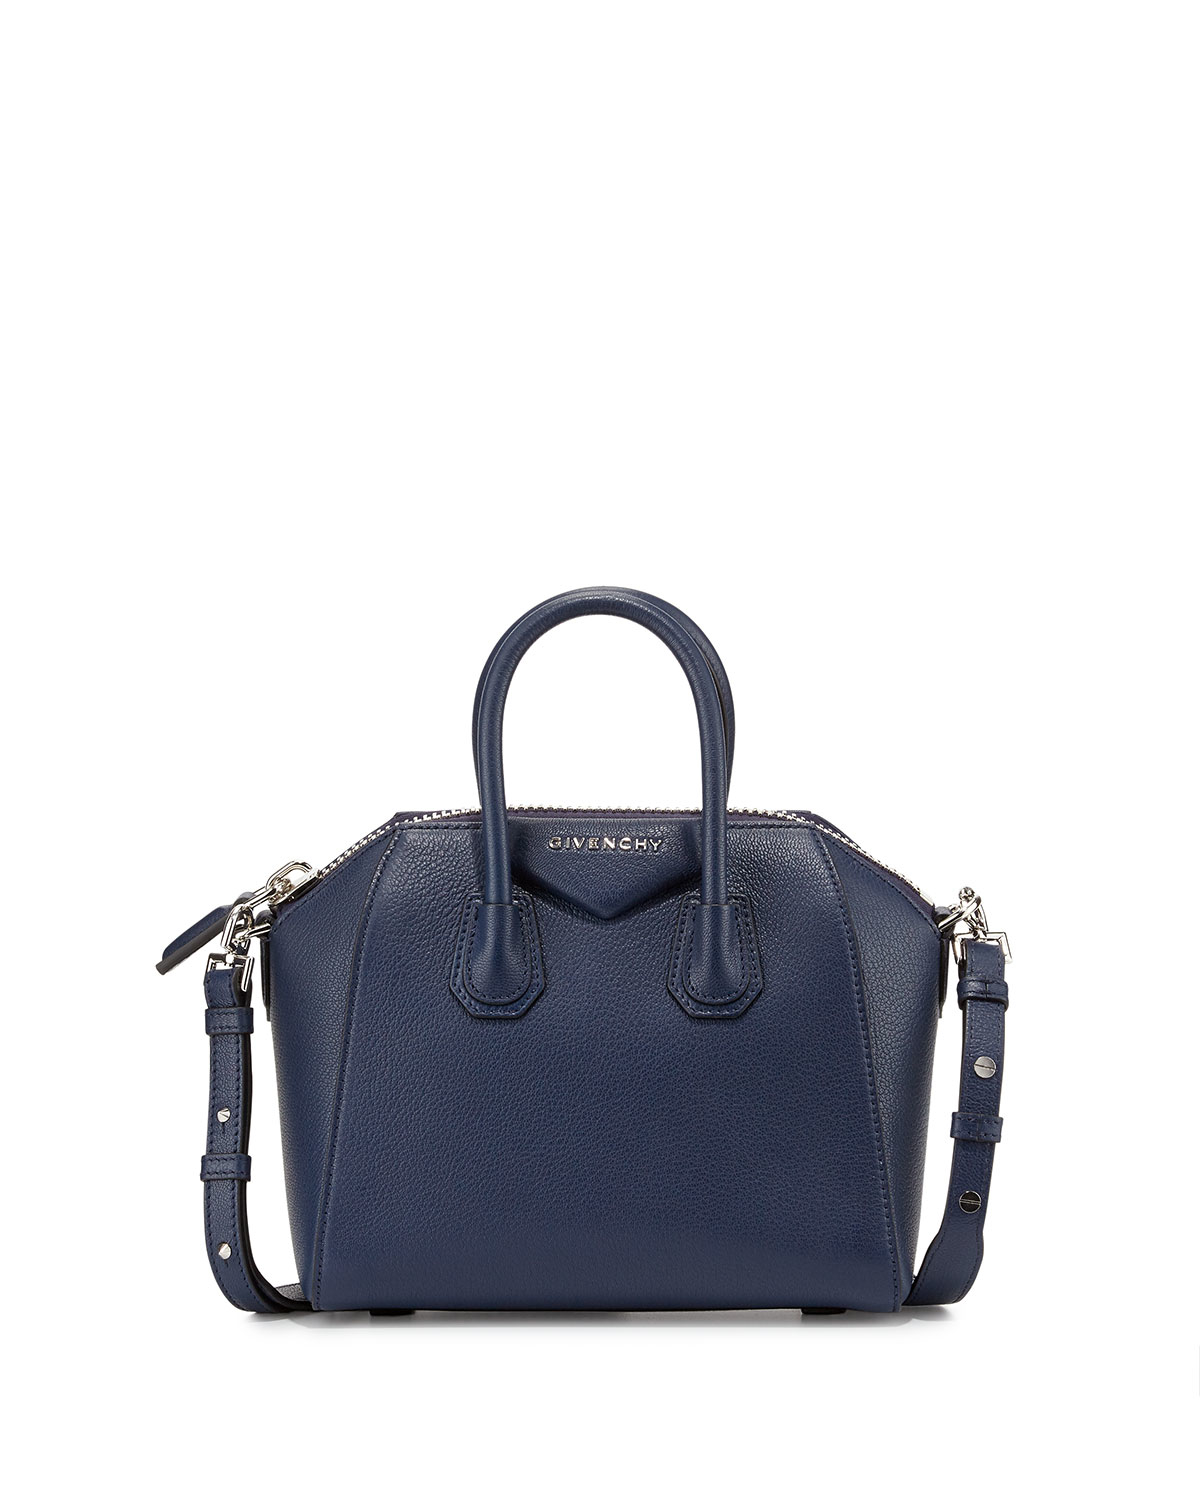 Givenchy Antigona Mini Leather Satchel Bag in Blue | Lyst